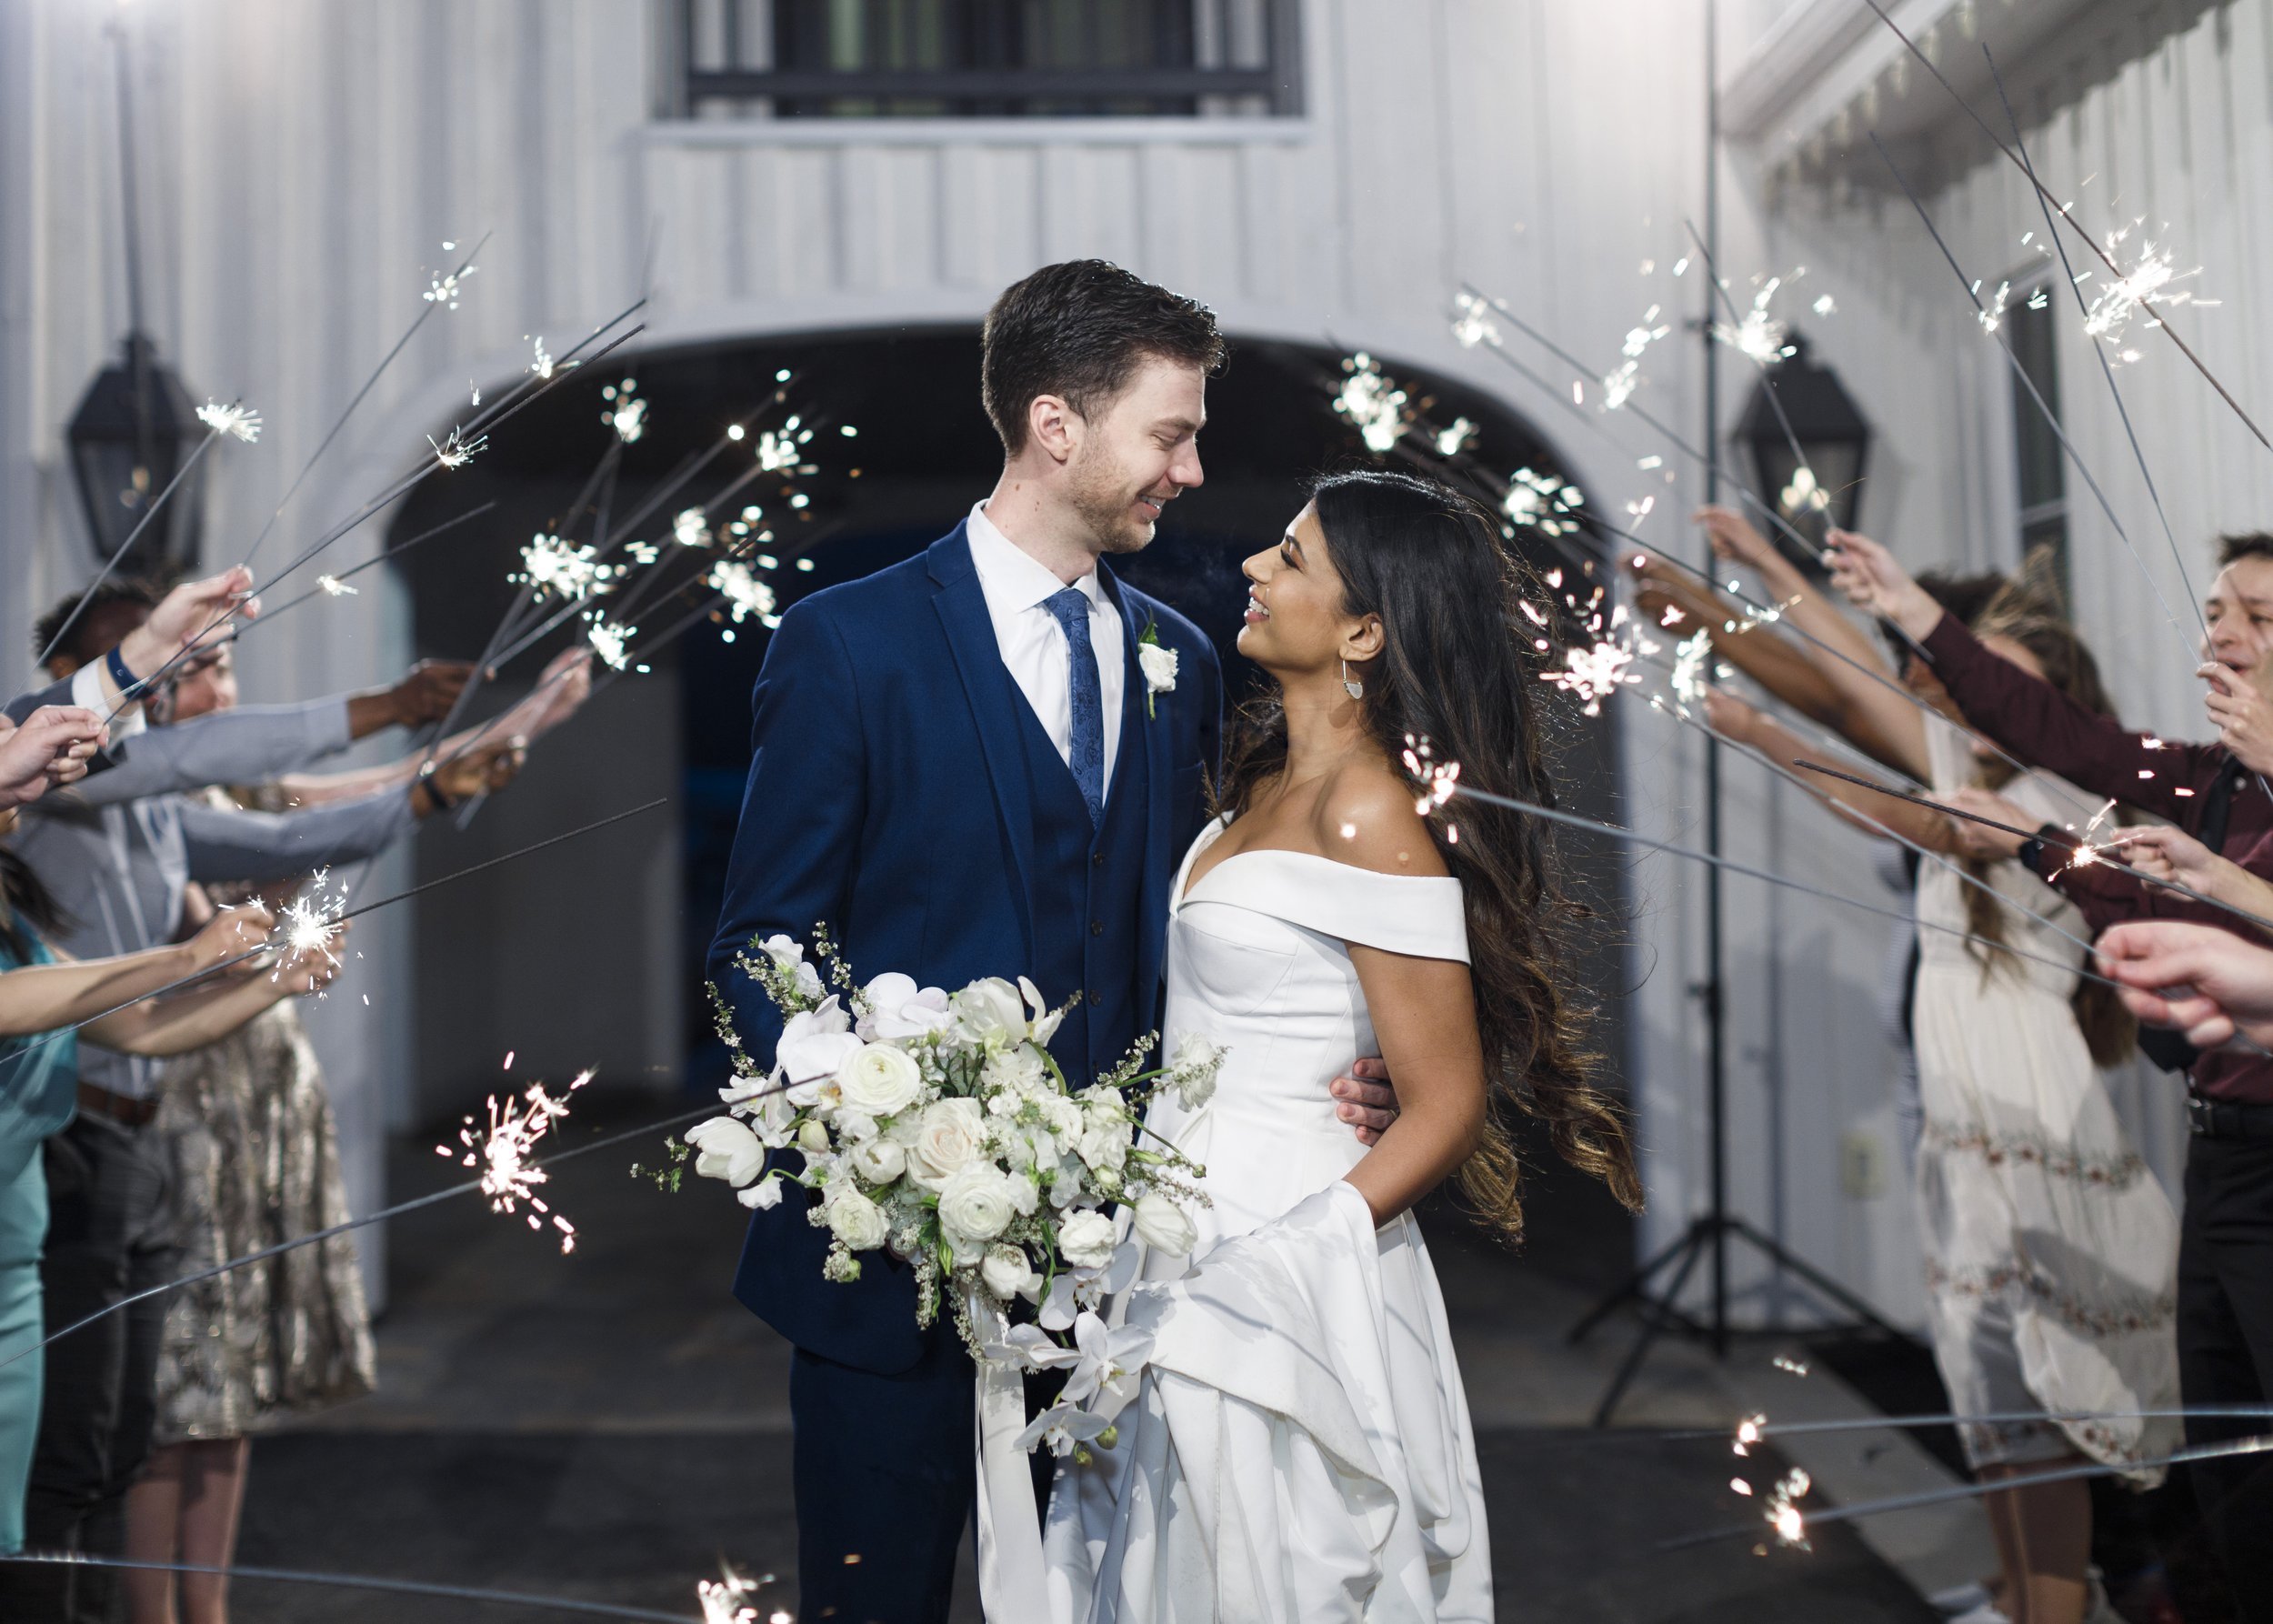  Sparkler wedding send-off for a bride and groom in Salt Lake County captured by Savanna Richardson Photography. send off ideas #SavannaRichardsonPhotography #SavannaRichardsonWeddings #bridals #formals #bouquets #Utahweddingphotographers #Wedding 